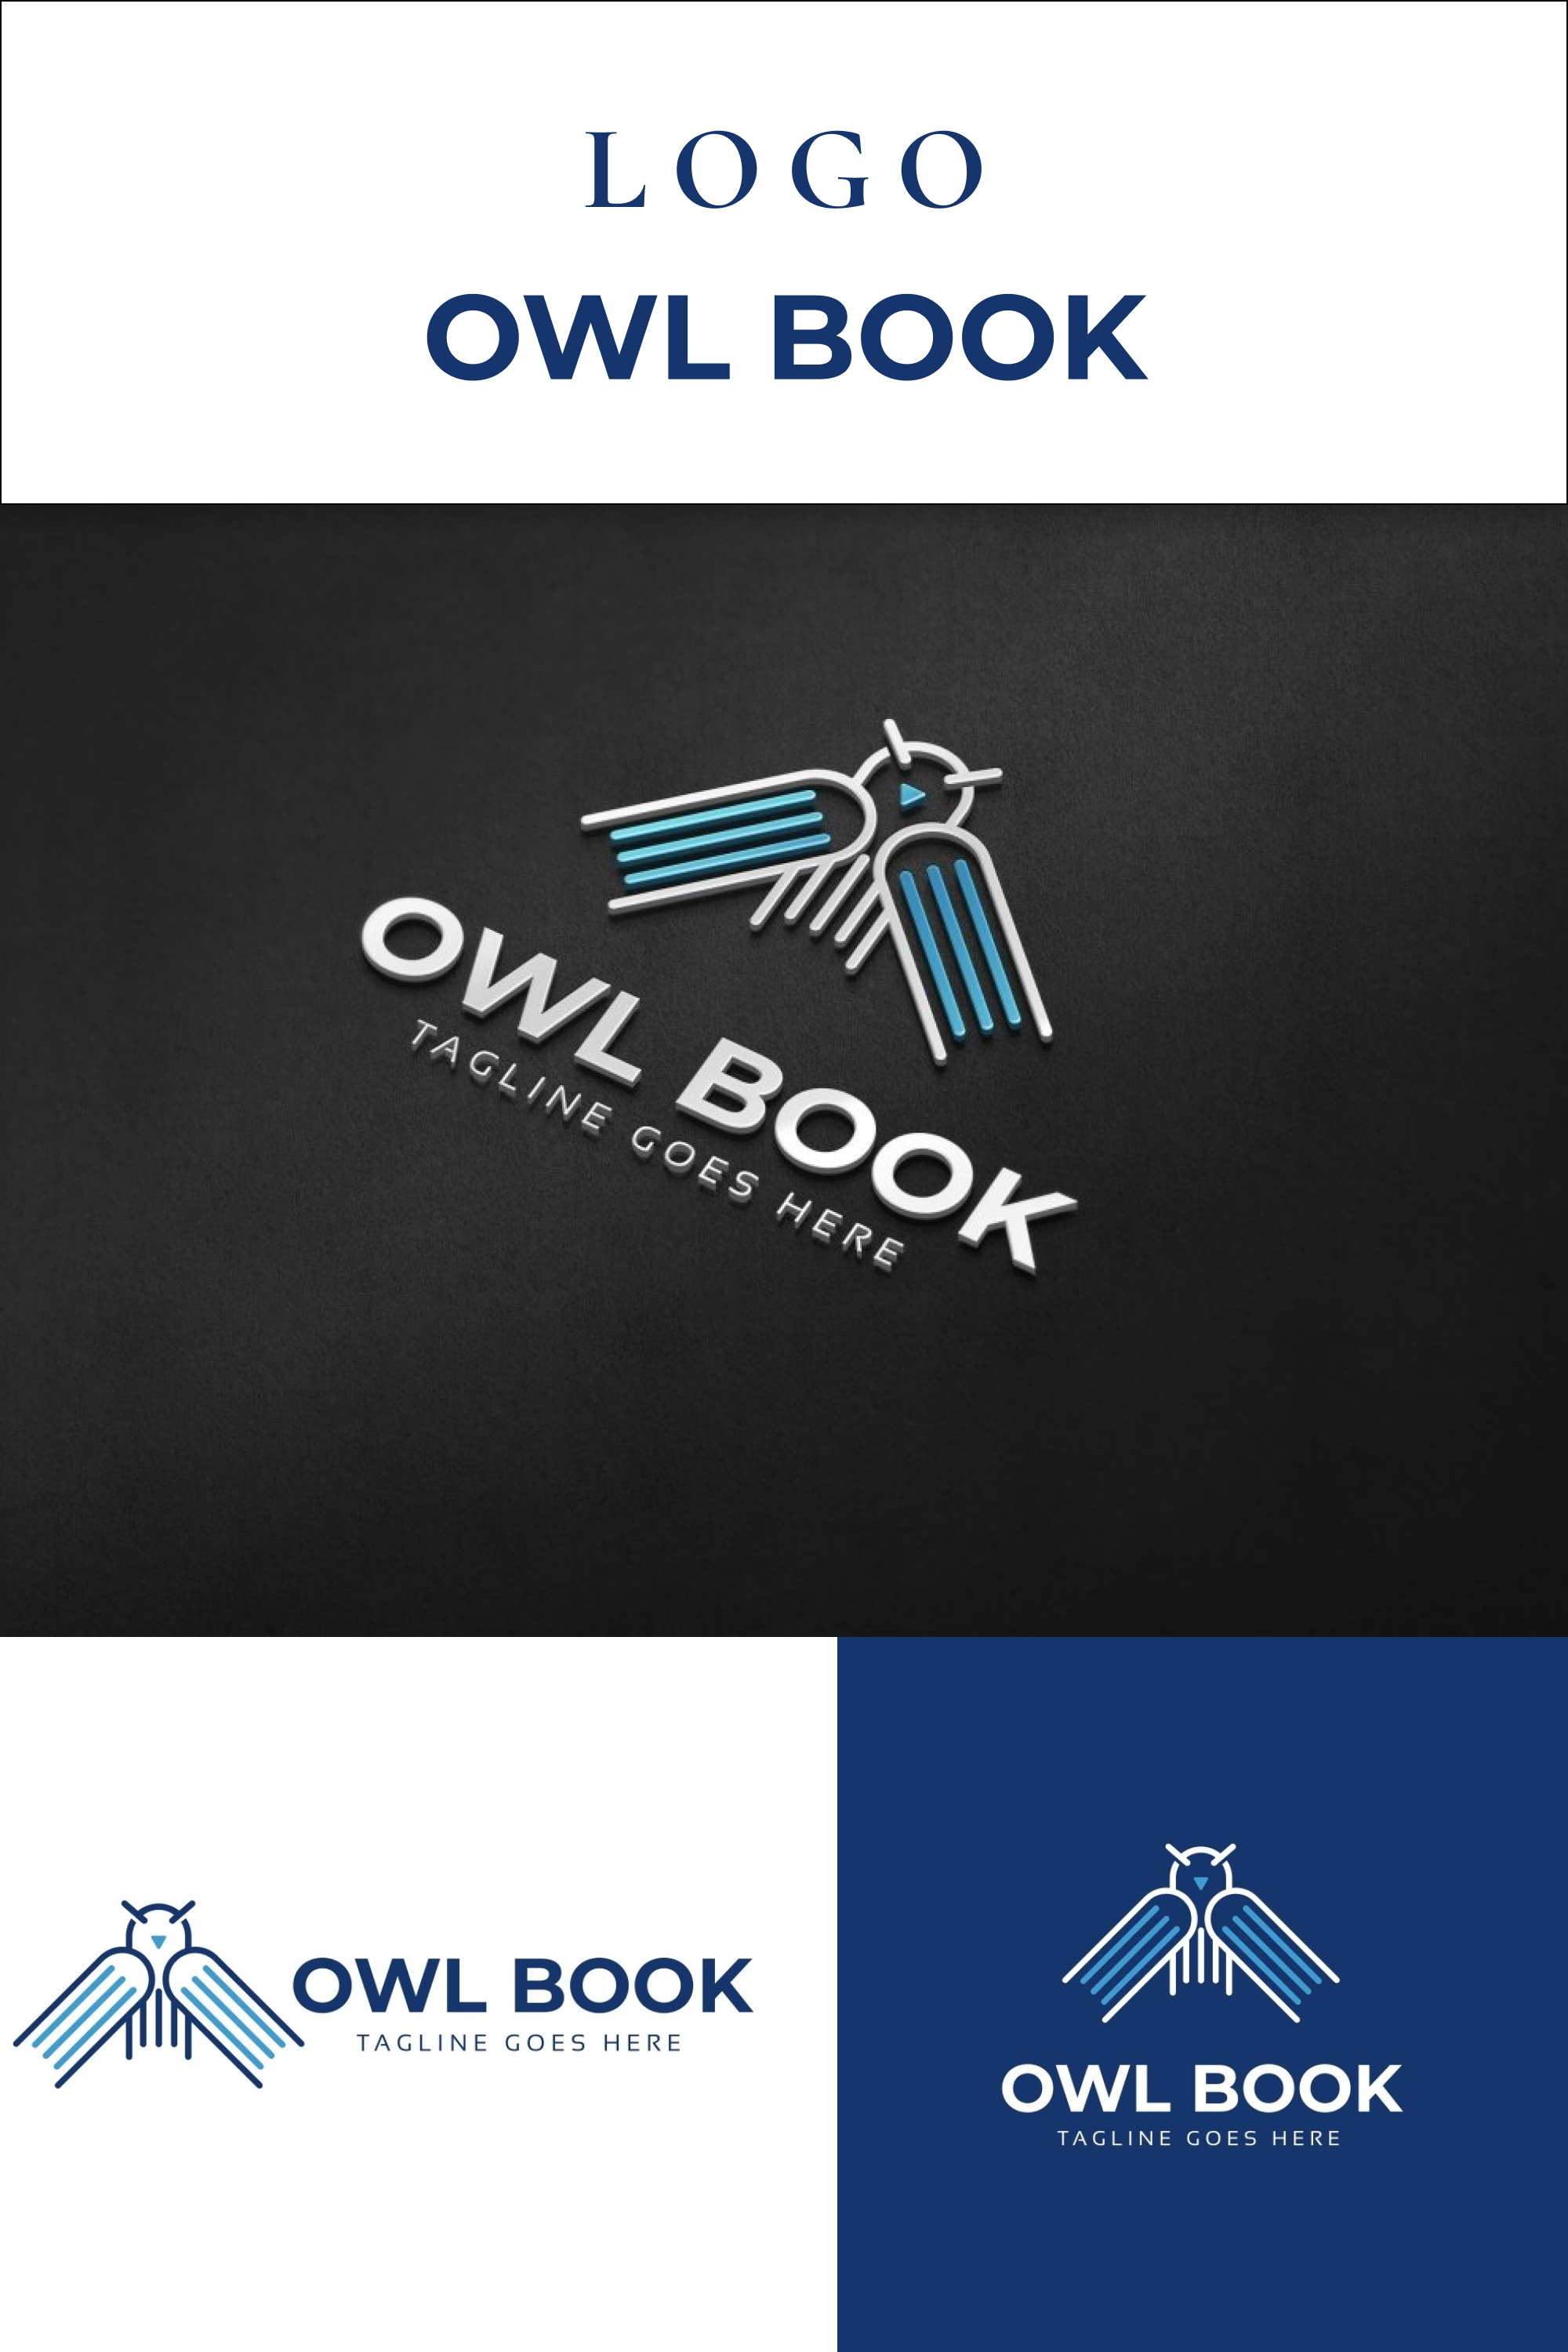 Owl book logo of pinterest.